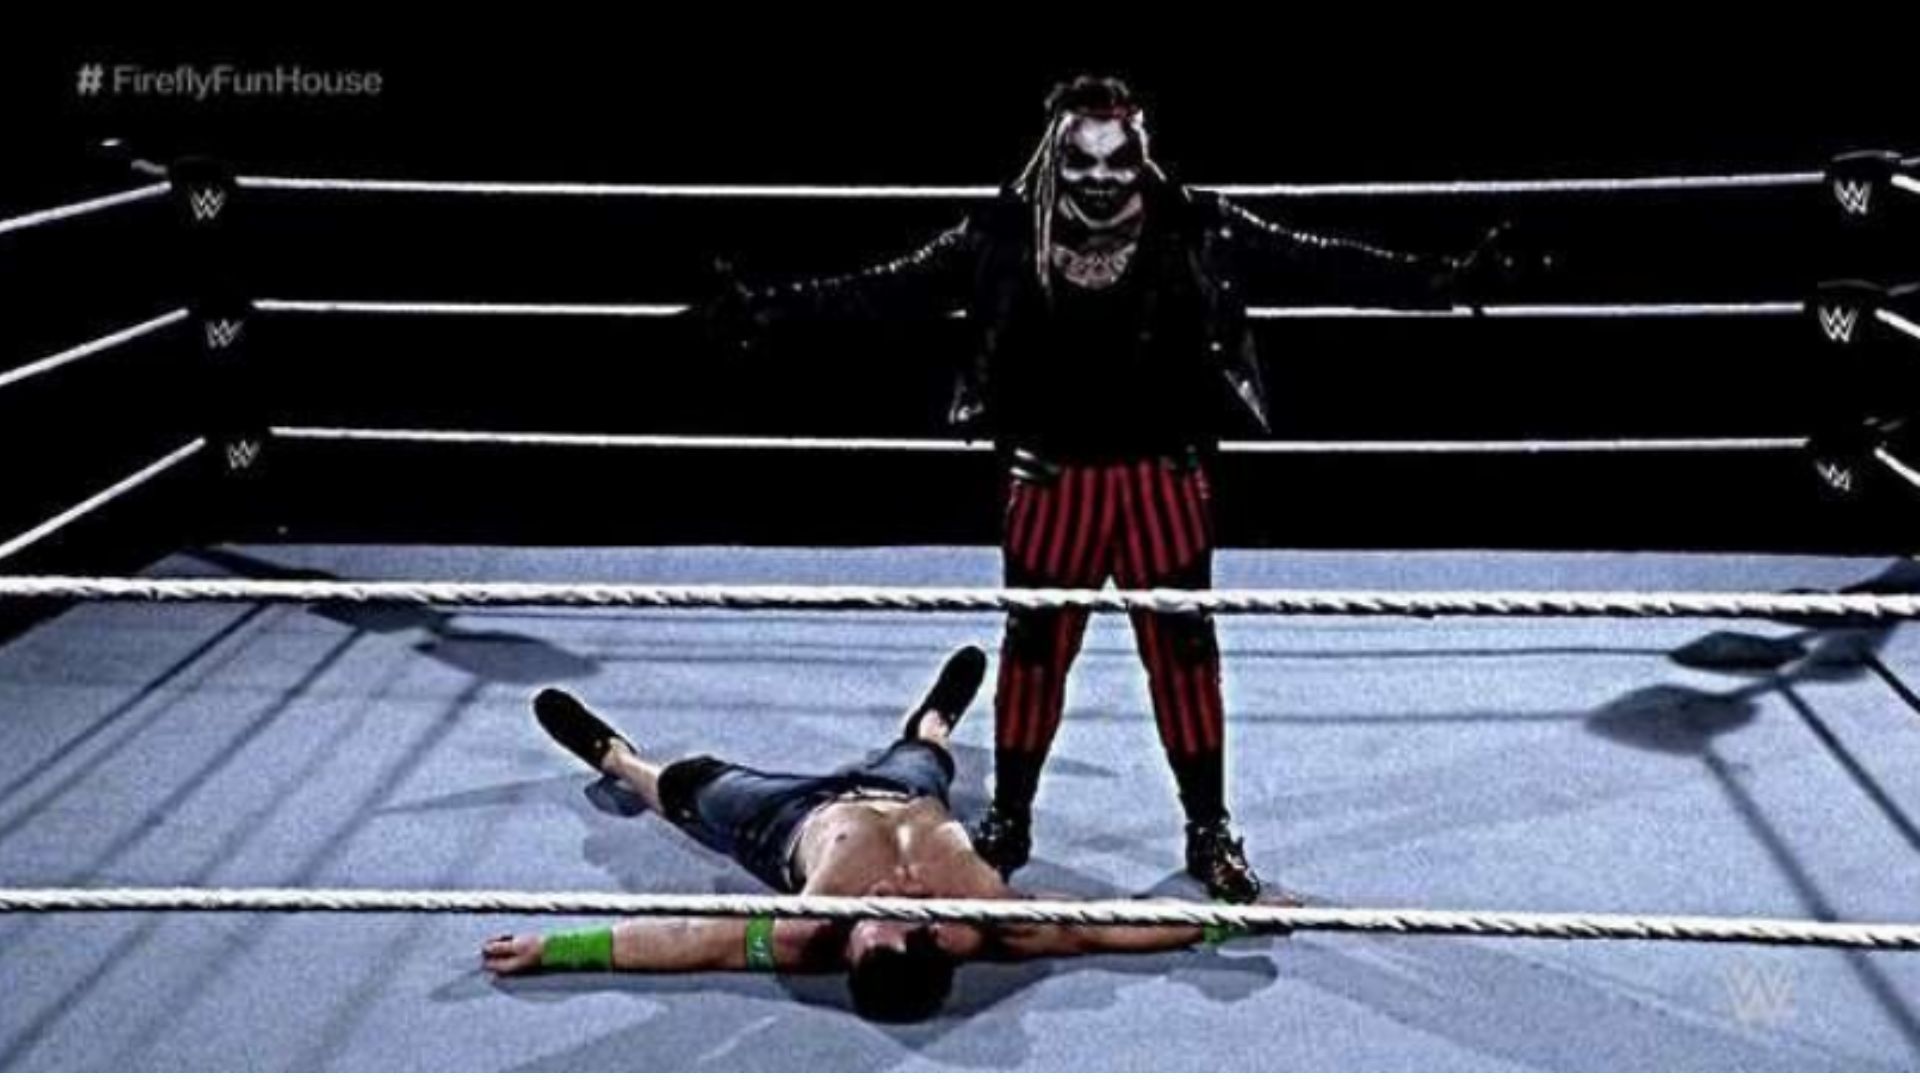 Wyatt fought John Cena in a Firefly Fun House match at WrestleMania 36